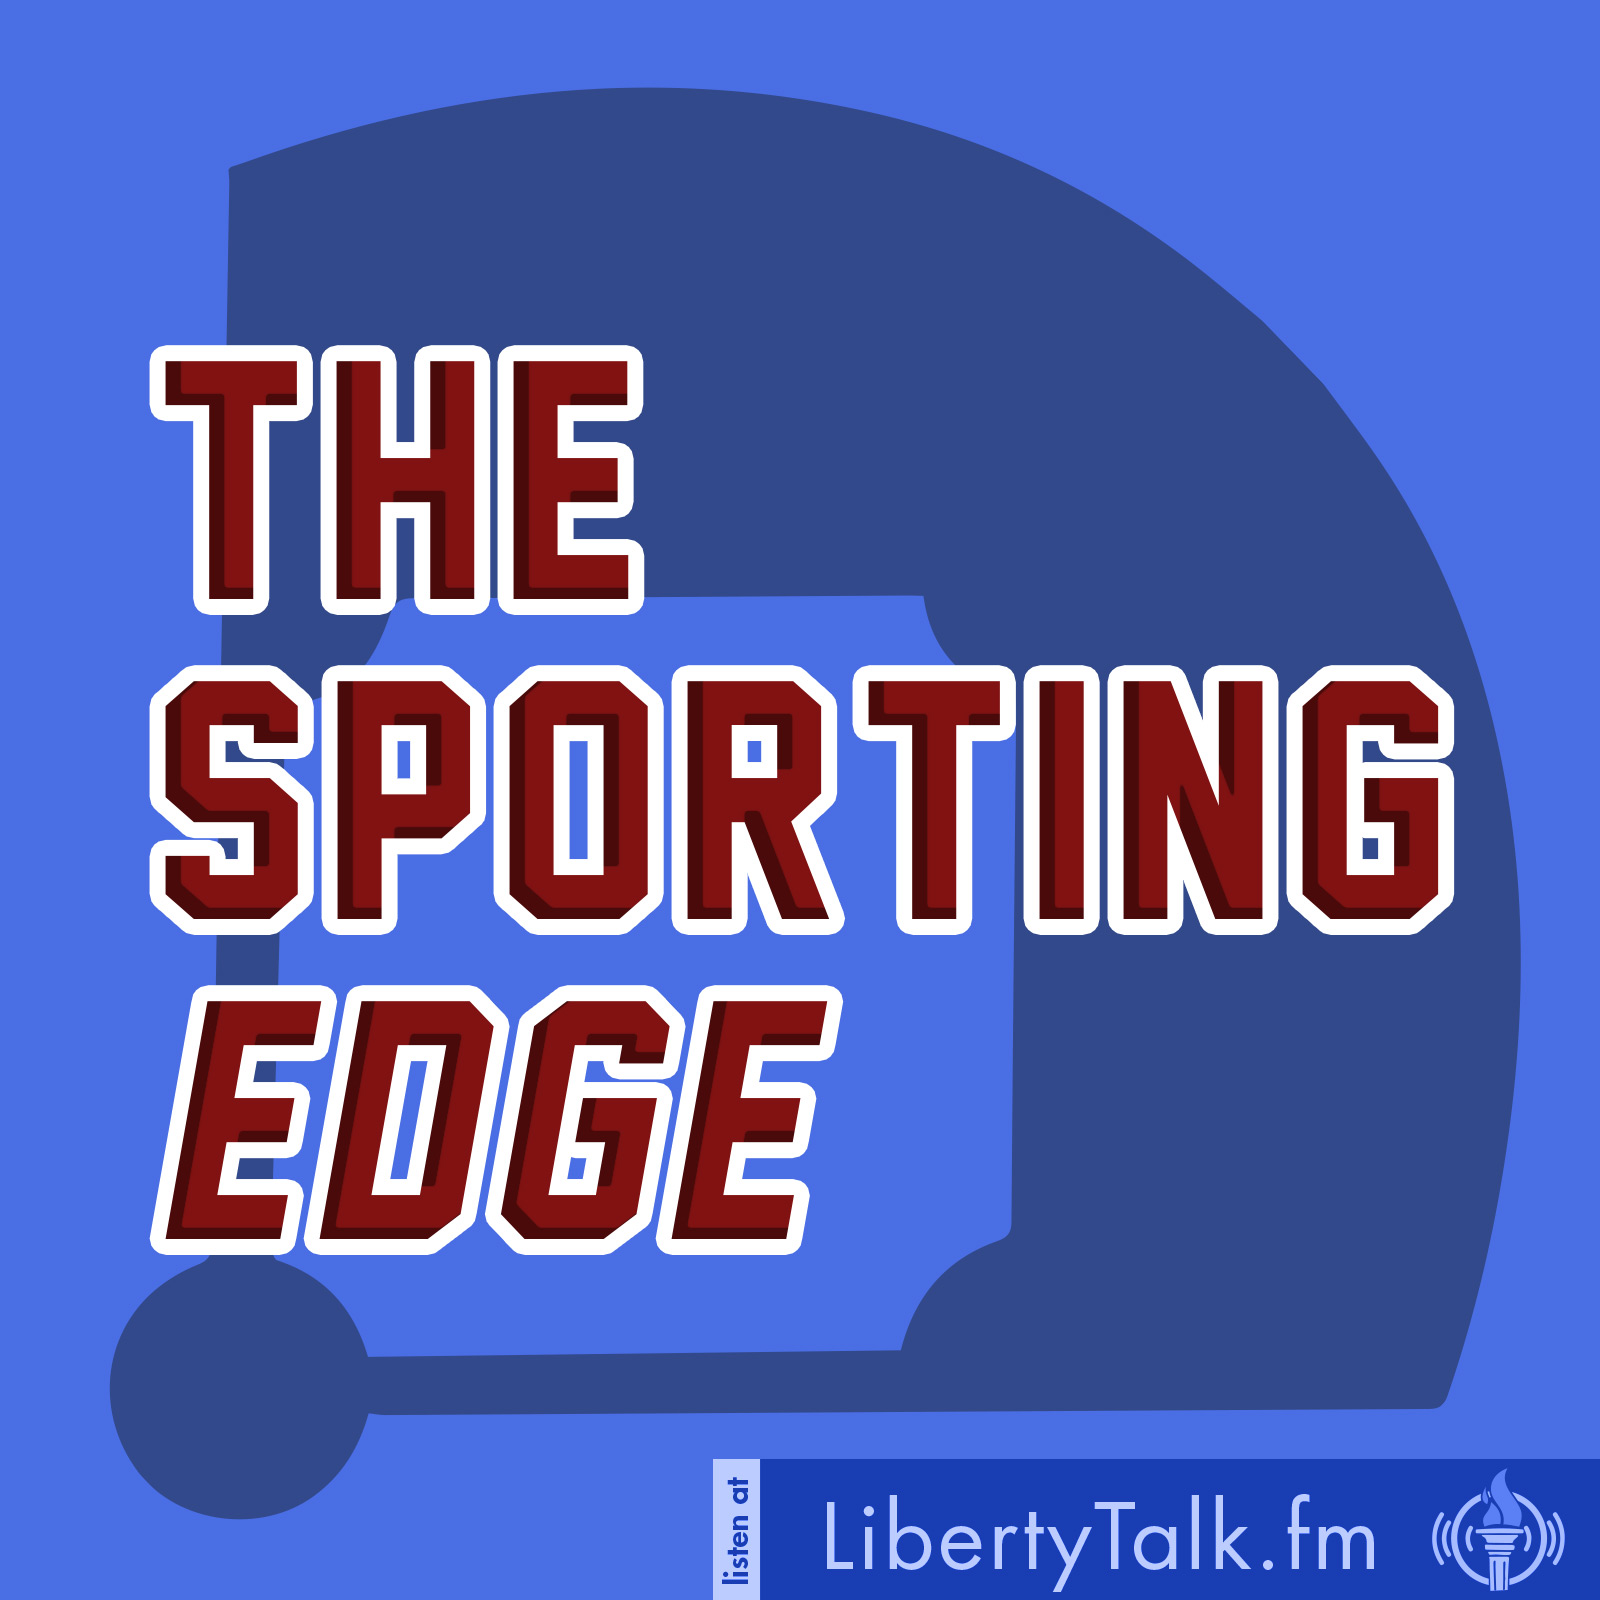 Sporting Edge on Liberty Talk FM LOGO